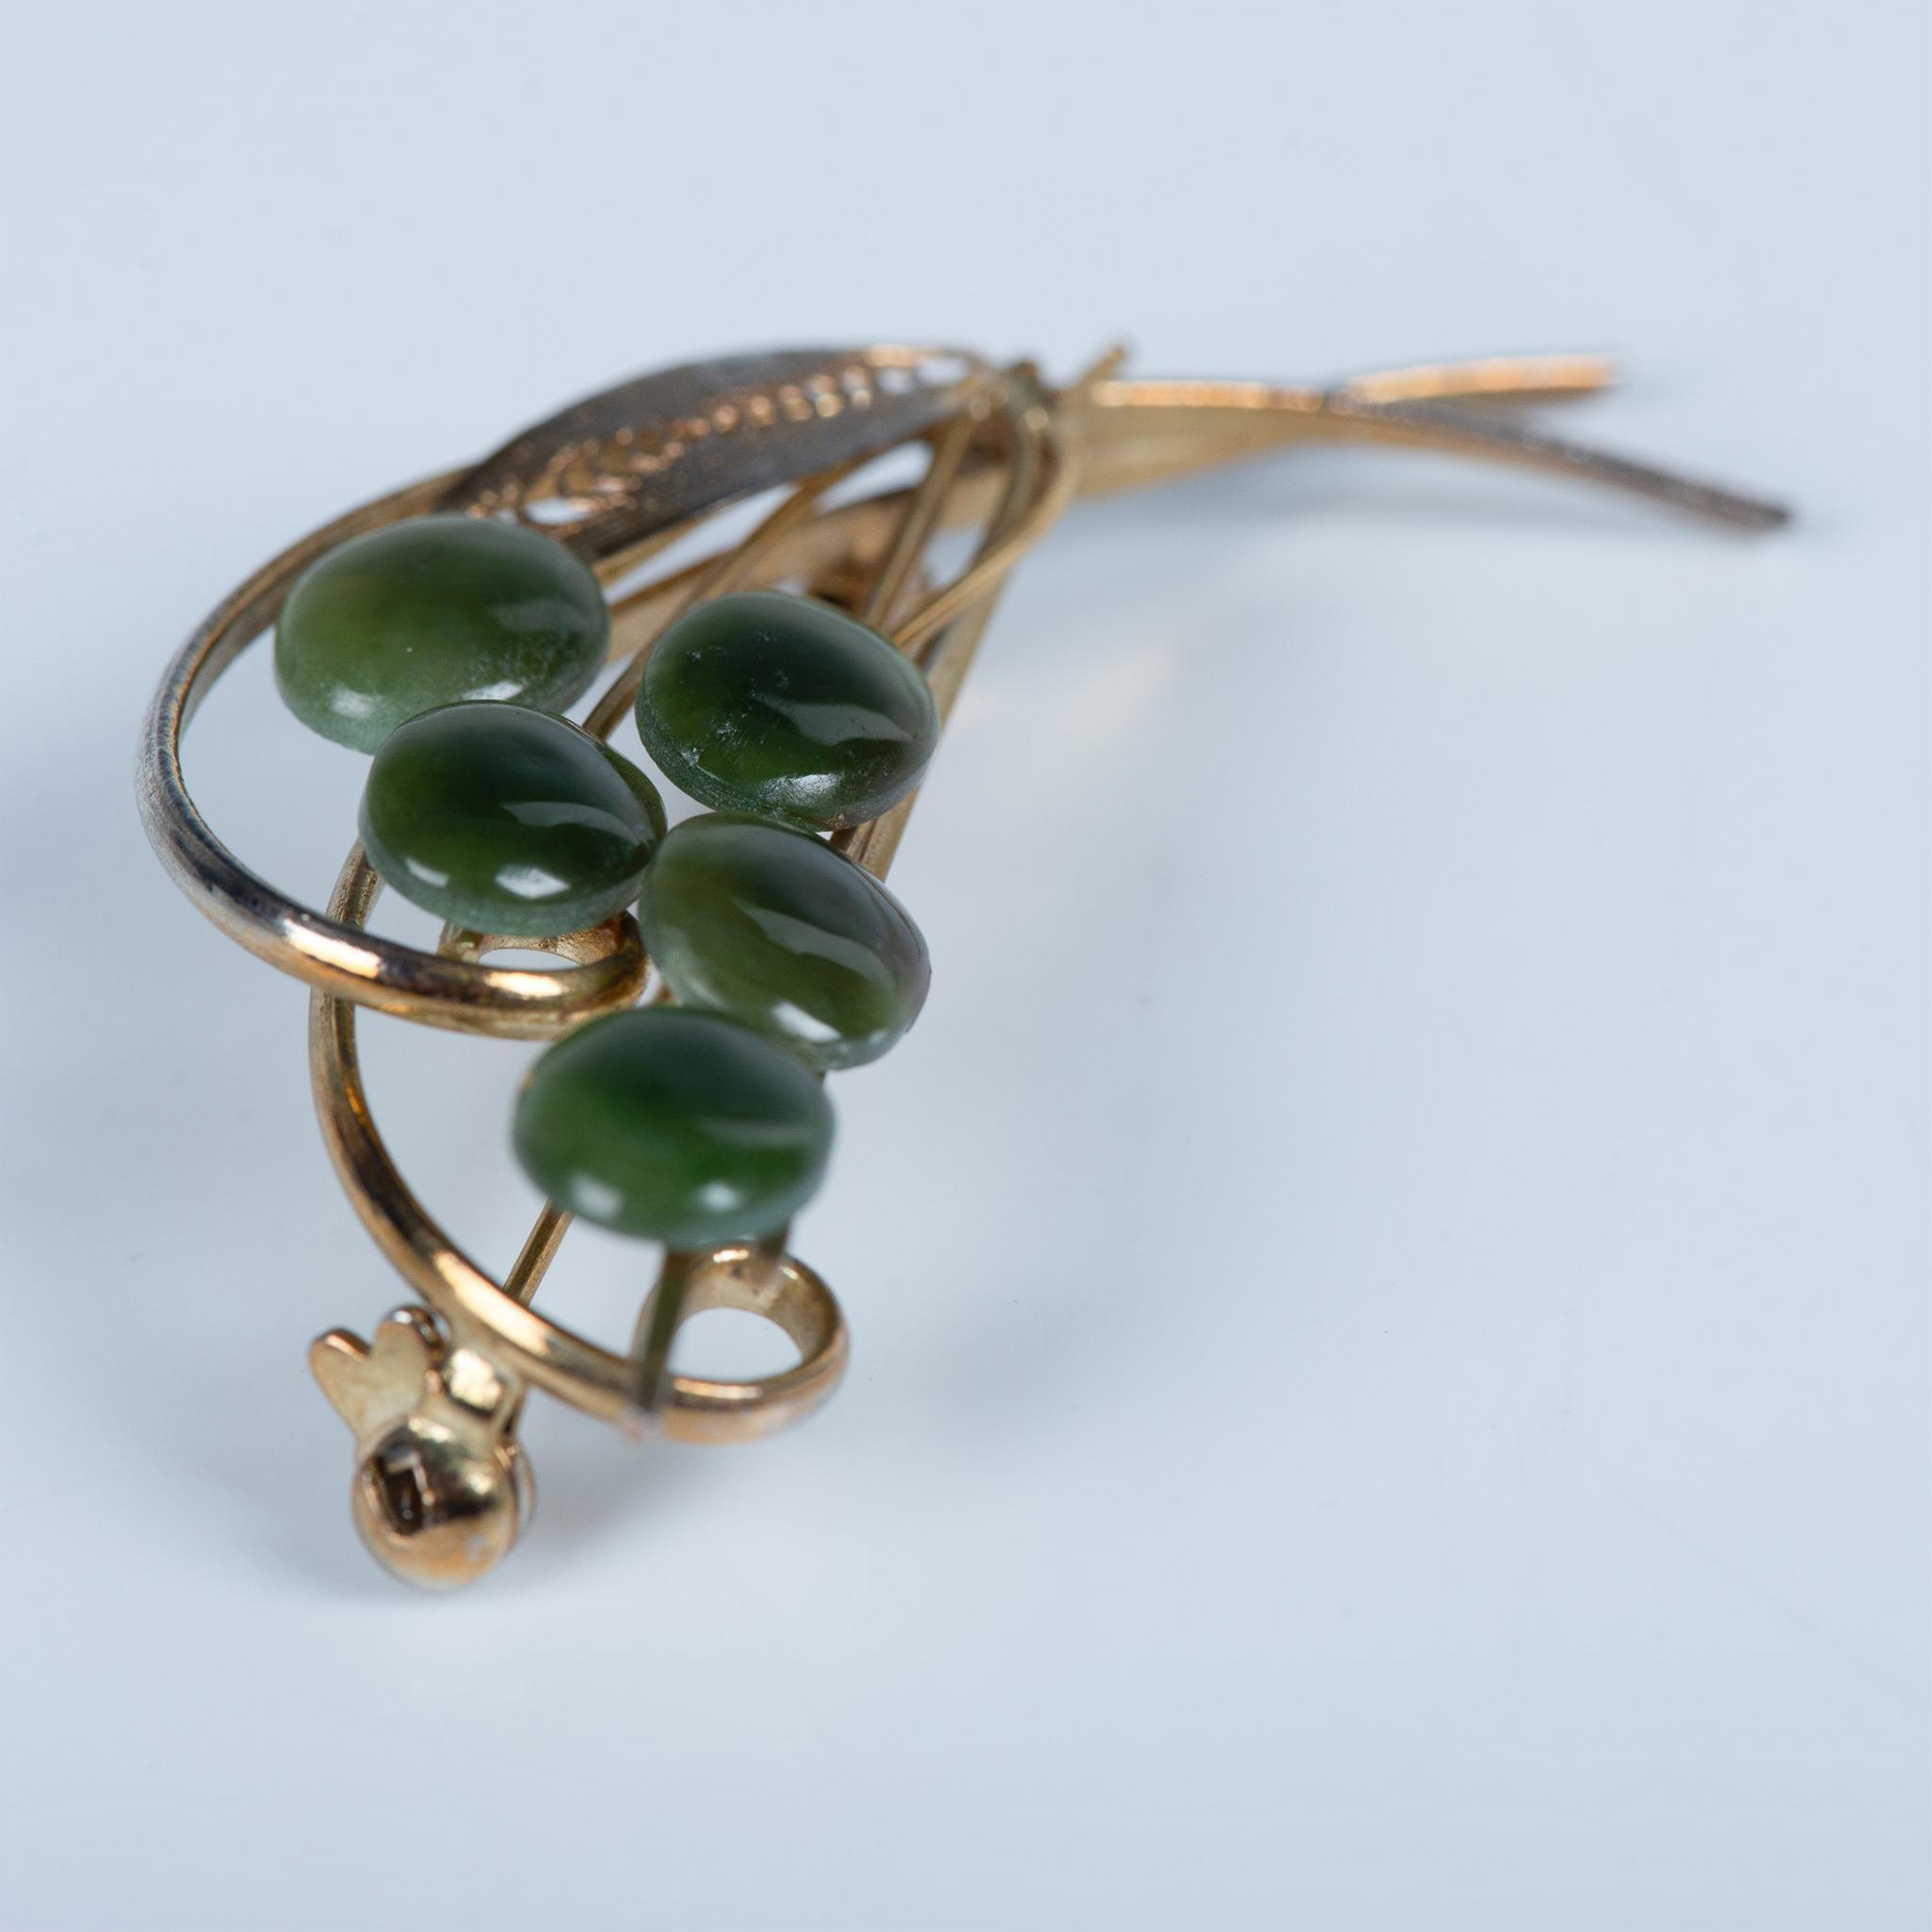 Vintage Gold Metal and Green Gemstone Floral Brooch - Image 4 of 4